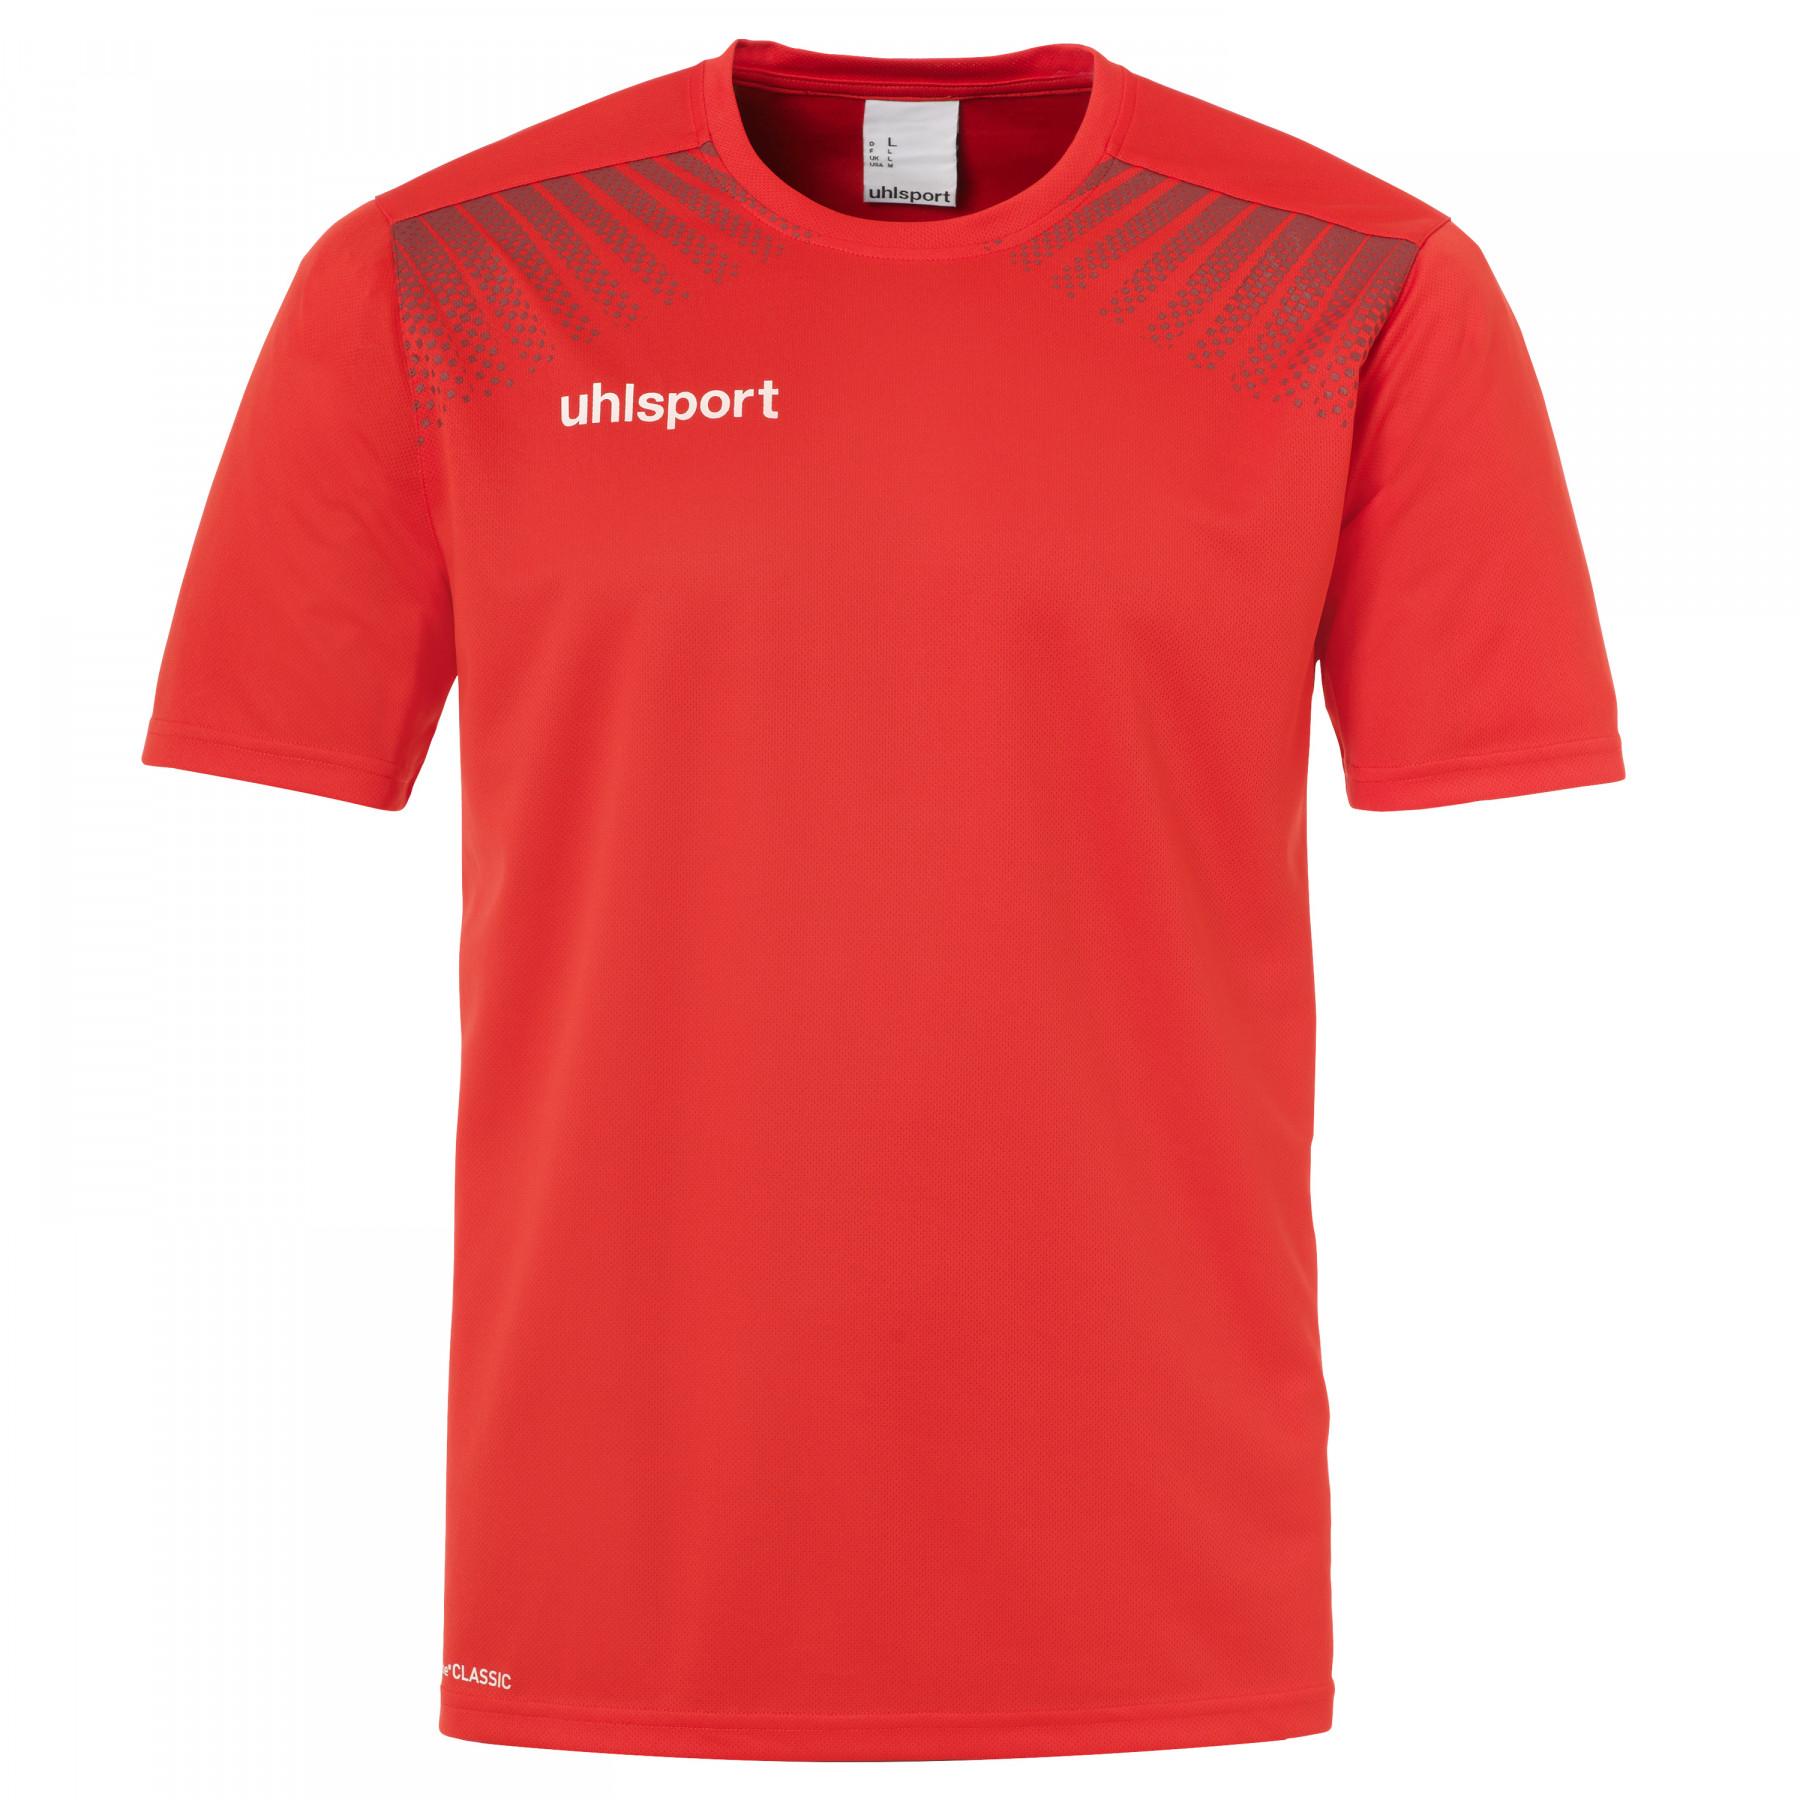 Child's T-shirt Uhlsport Goal